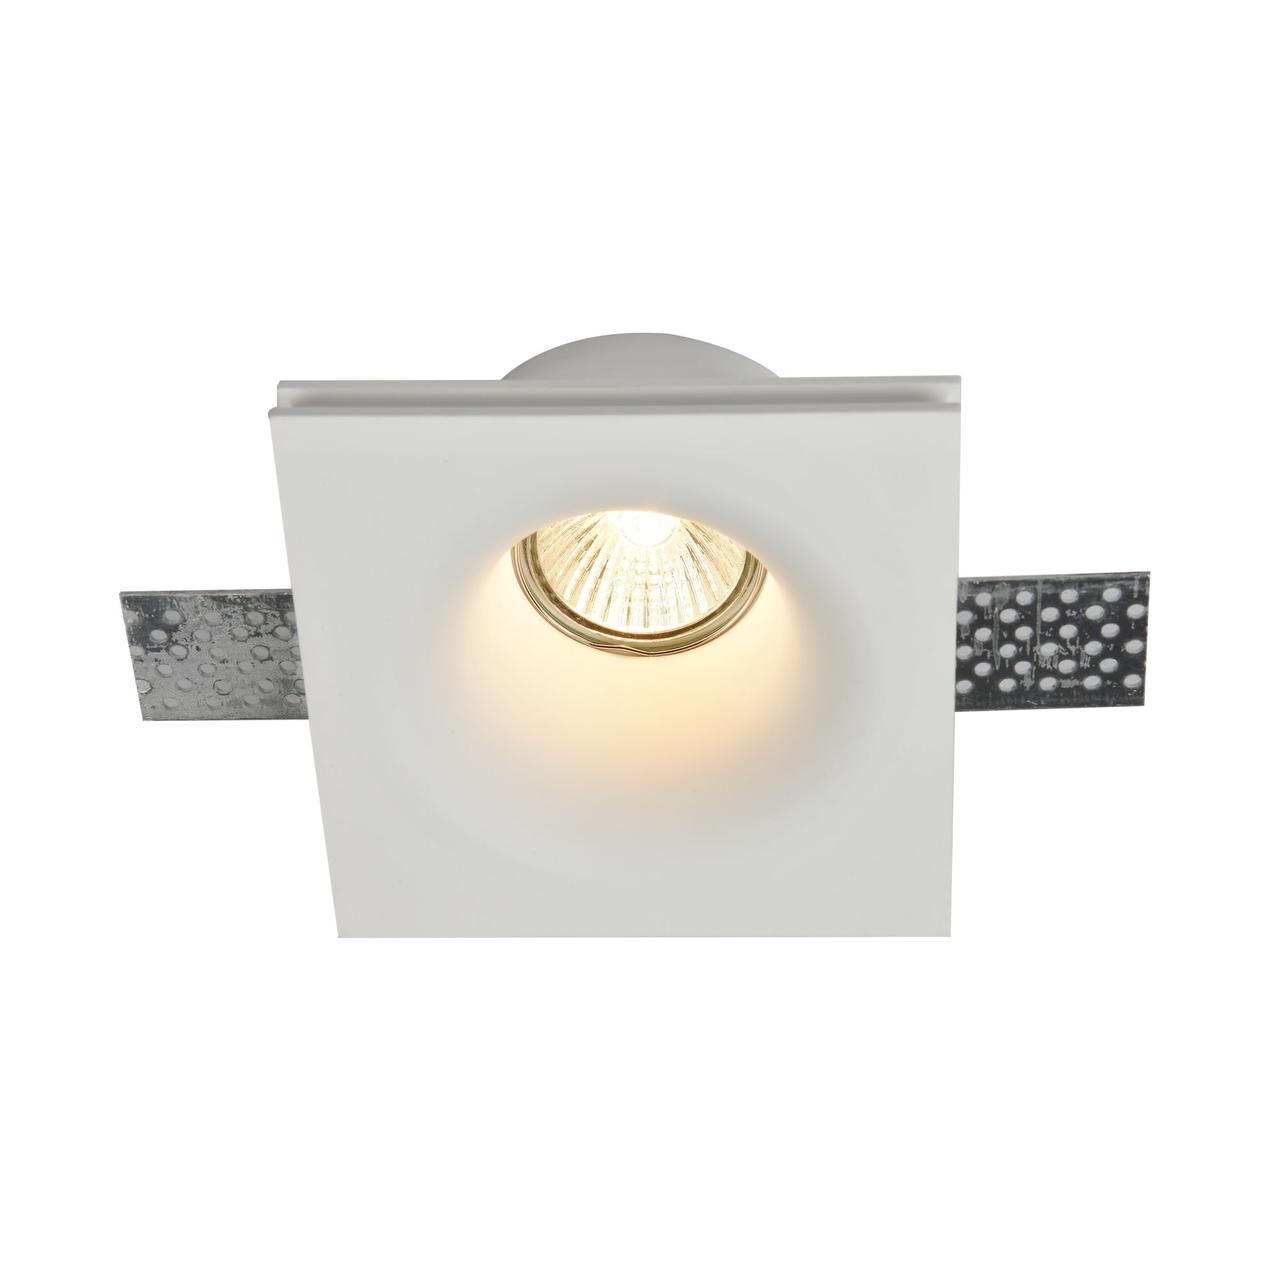 DL001-1-01-W Встраиваемый светильник Gyps Modern Downlight Maytoni